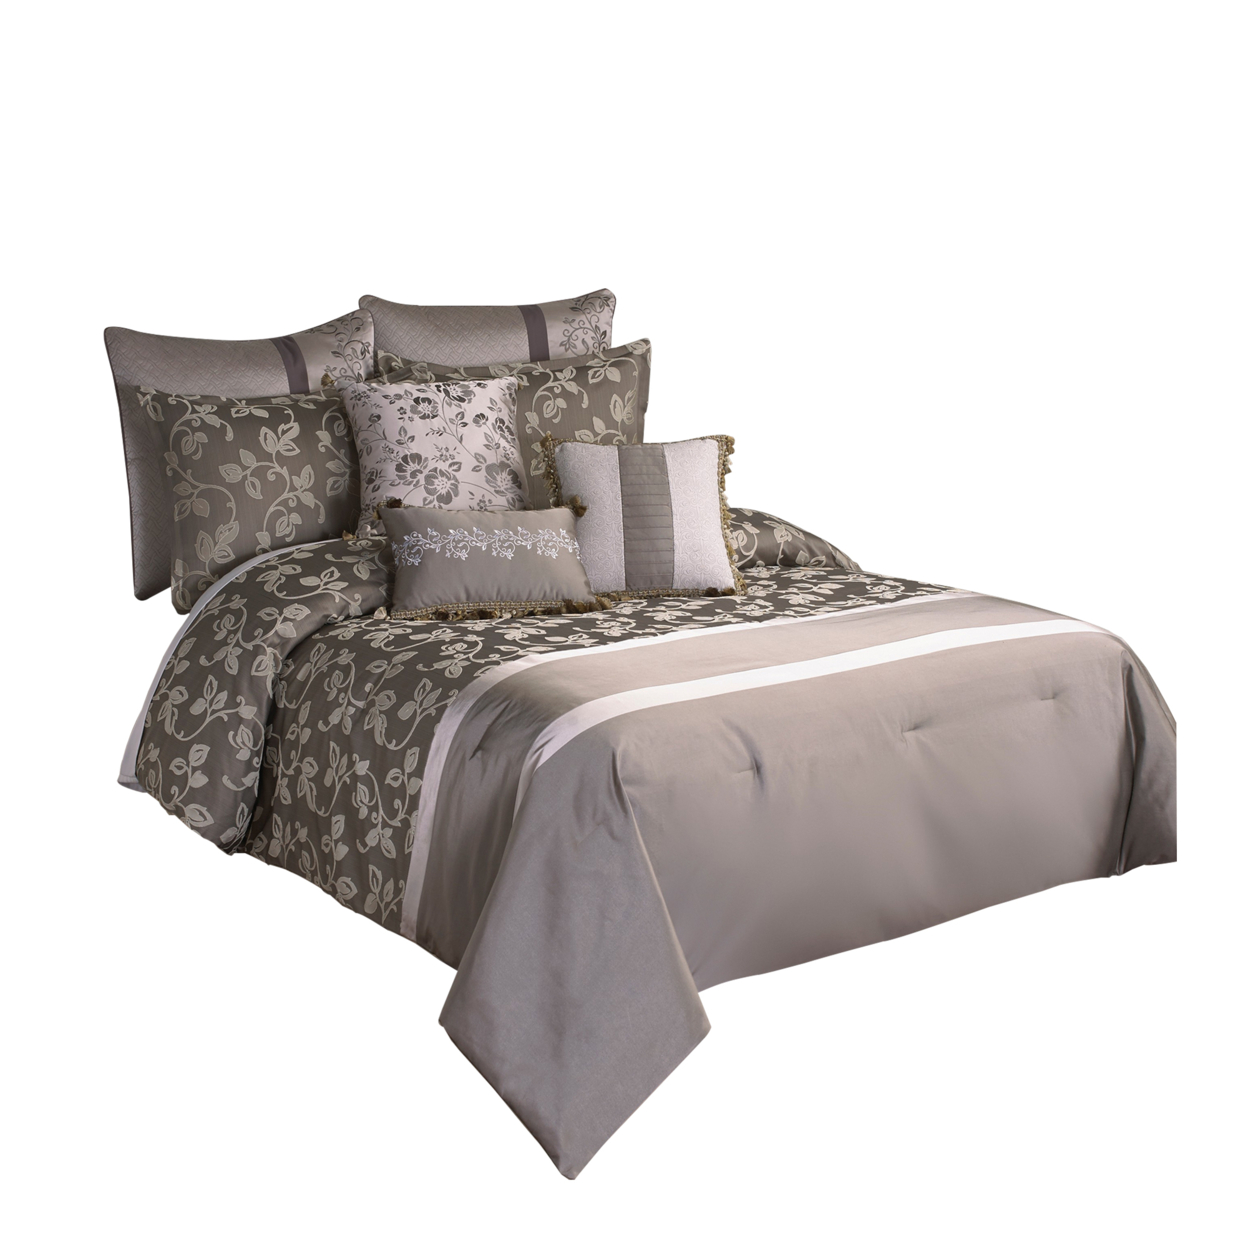 10 Piece King Polyester Comforter Set With Leaf Print, Platinum Gray- Saltoro Sherpi